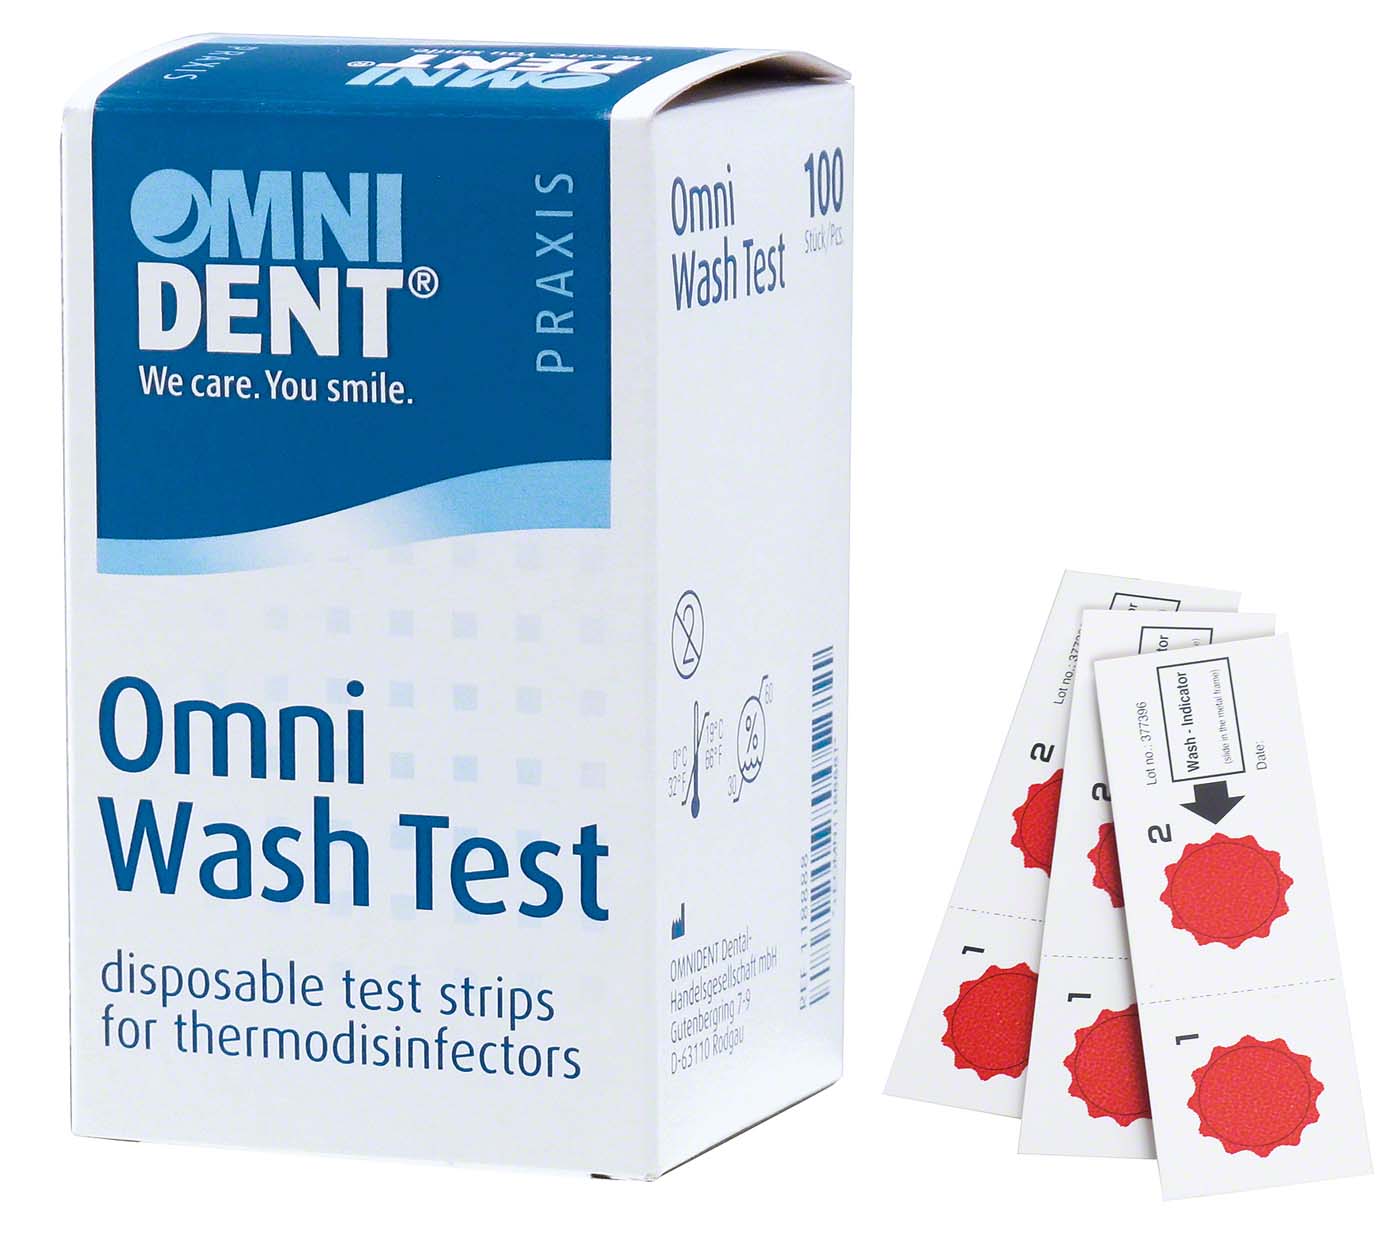 Omni Wash Test OMNIDENT